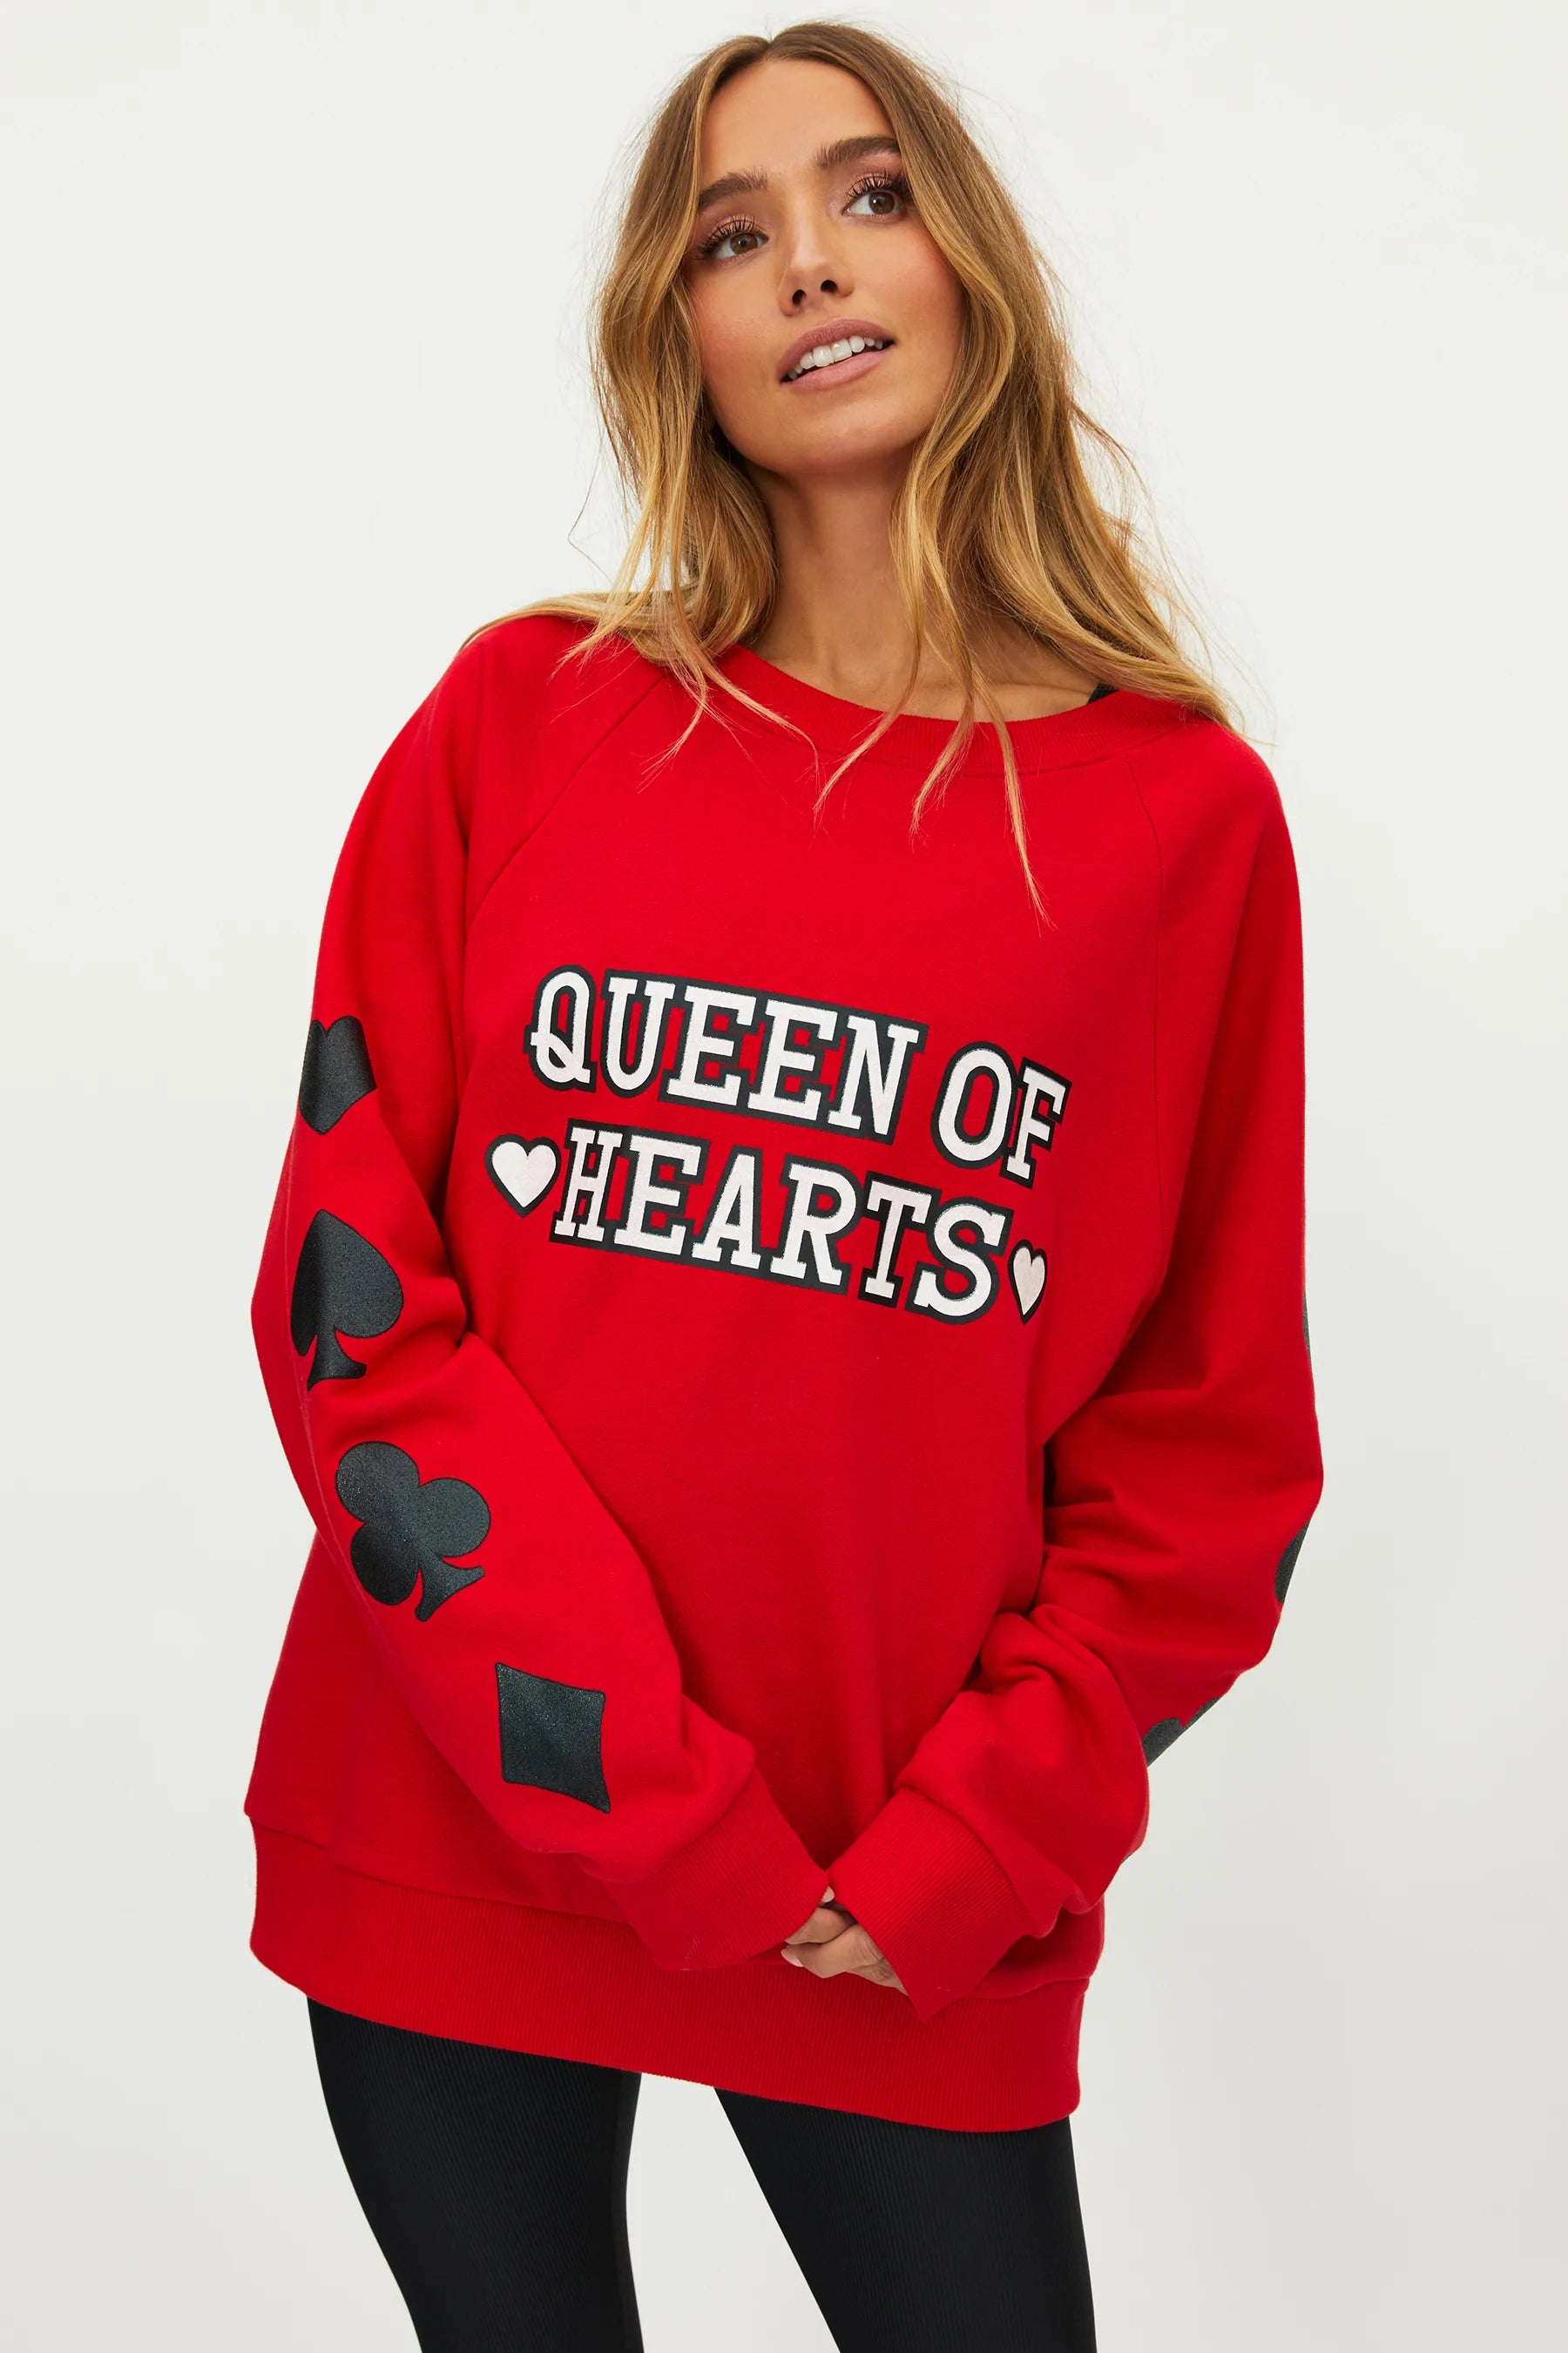 Queen of Hearts Sweater Scarlett